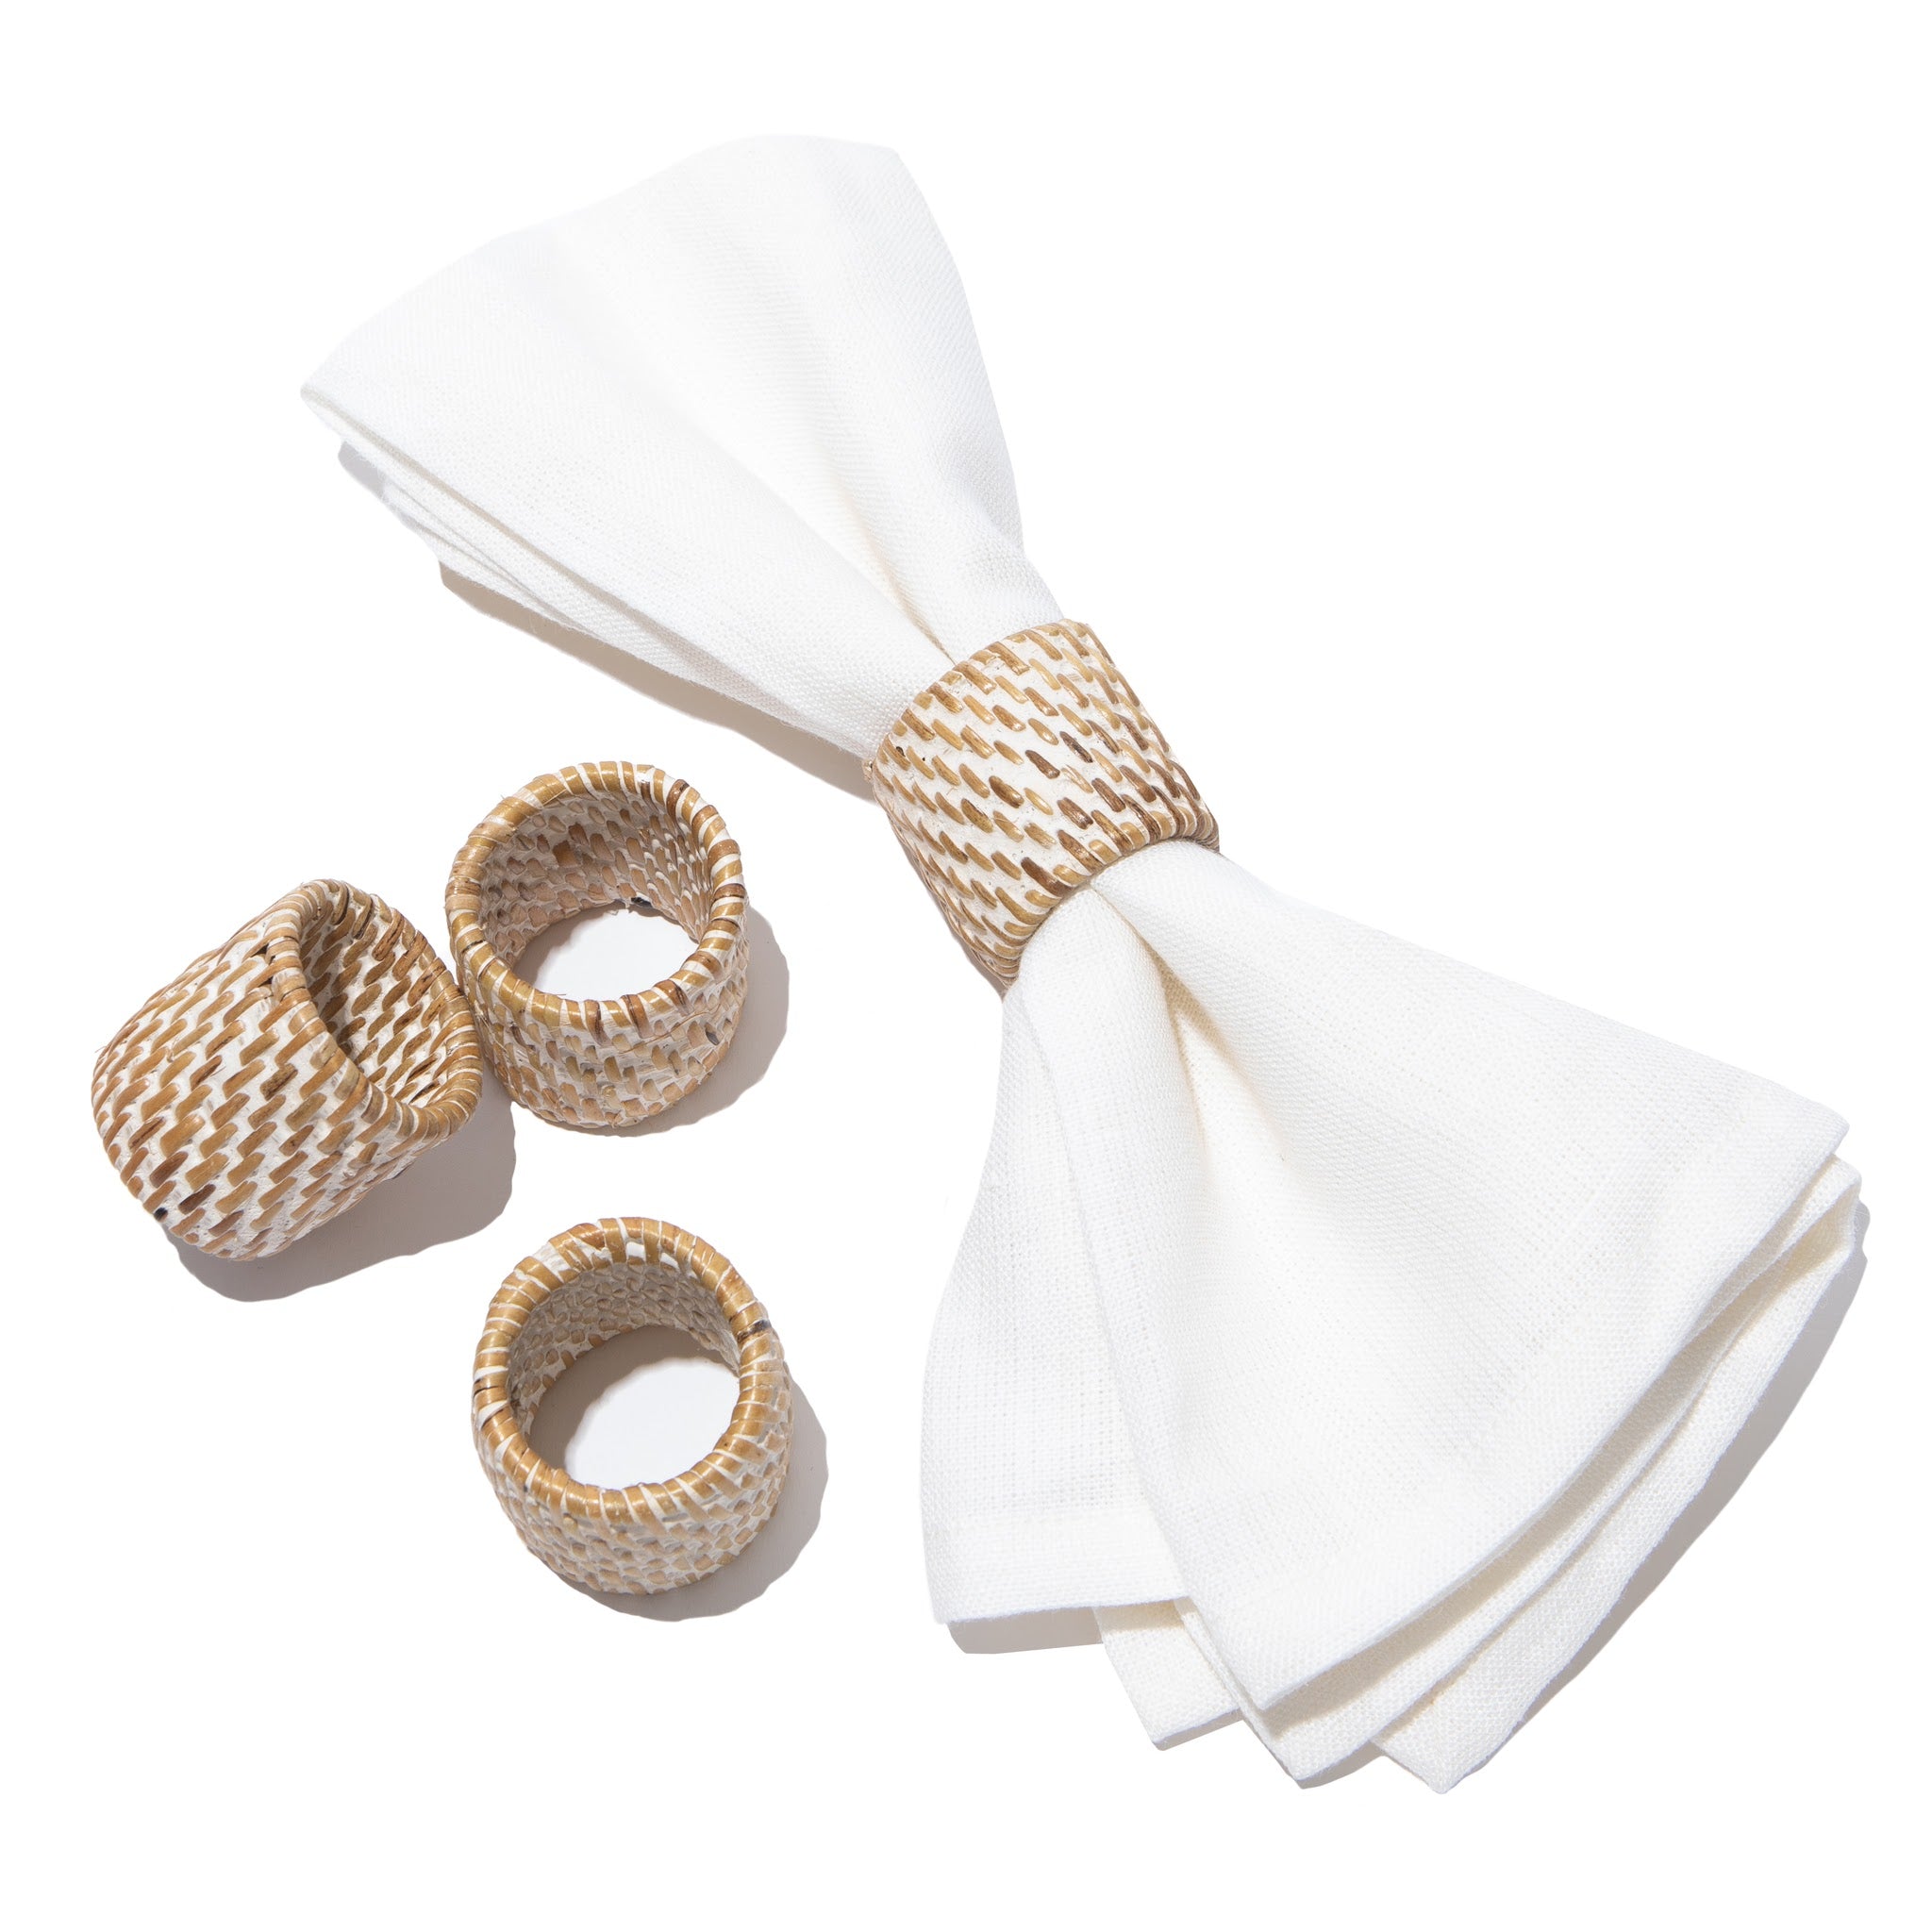 Everyday White Wash Napkin Ring  - Set of 4